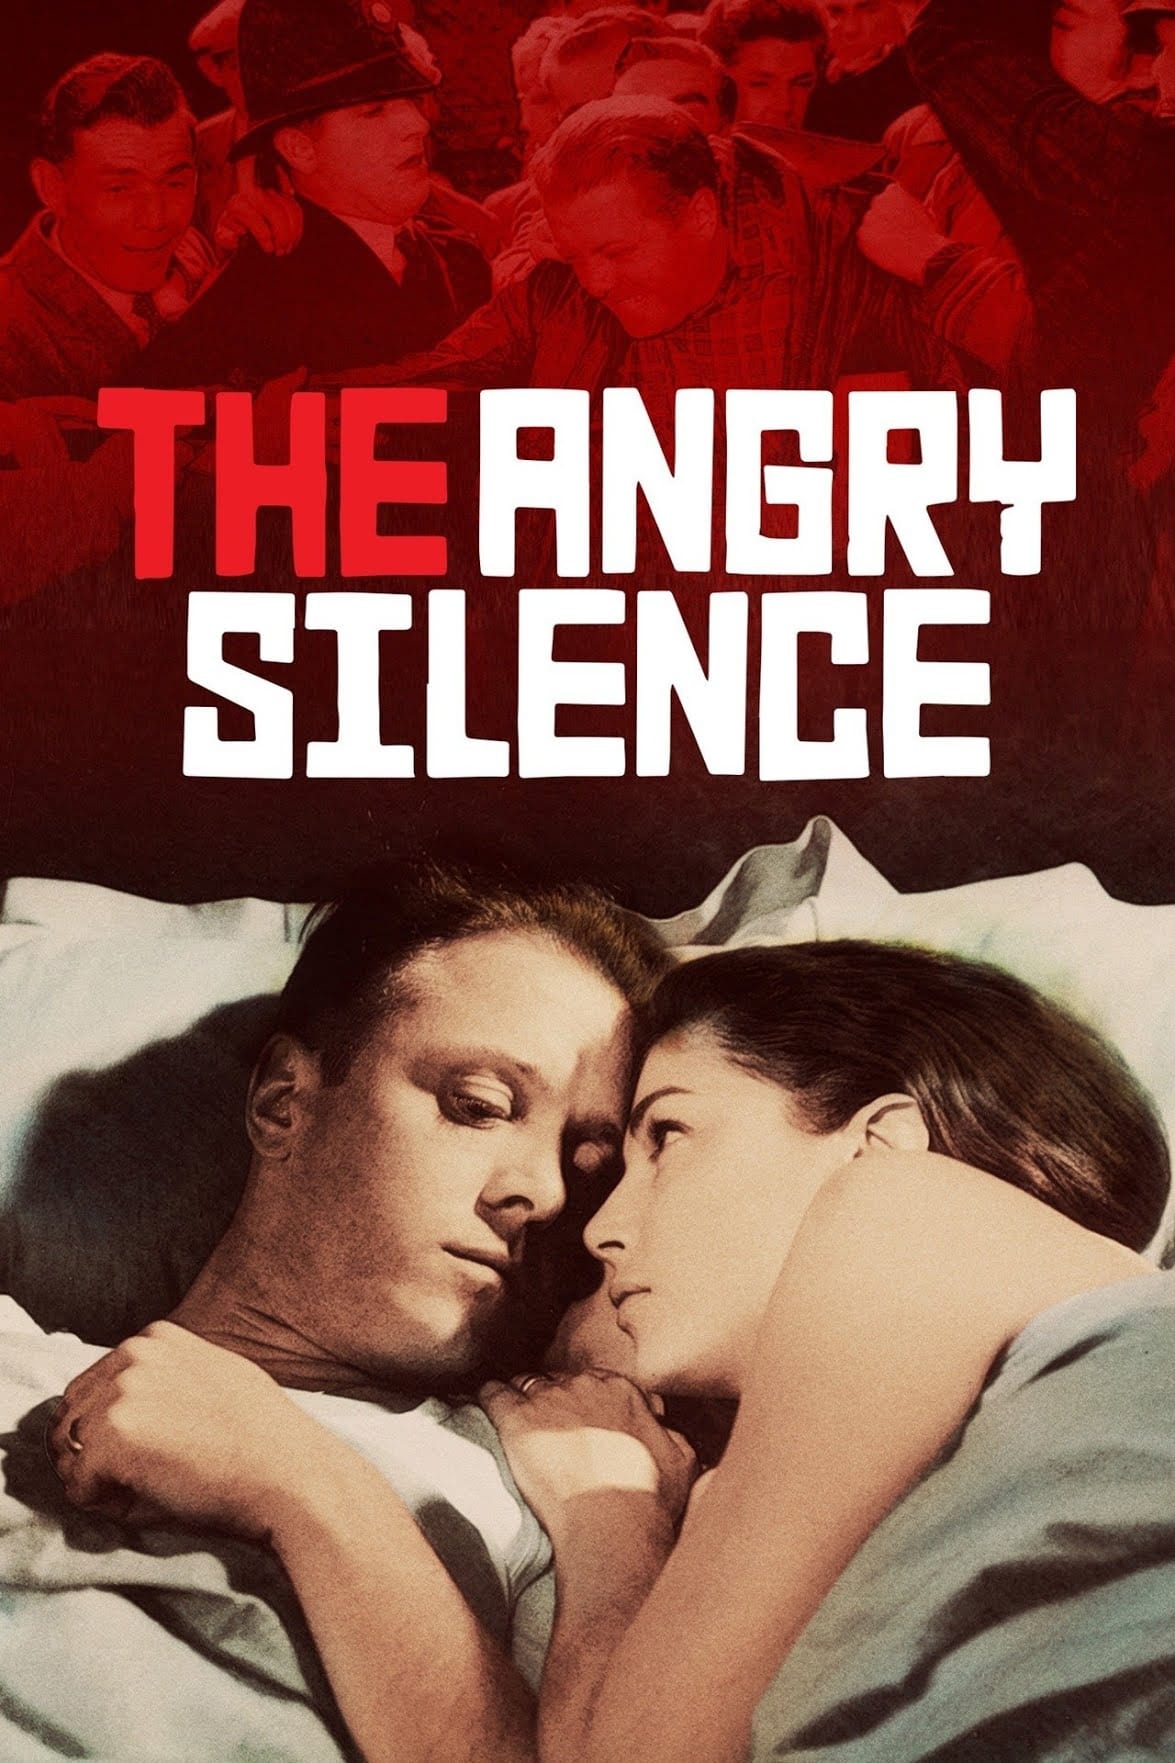 The Angry Silence (1960)